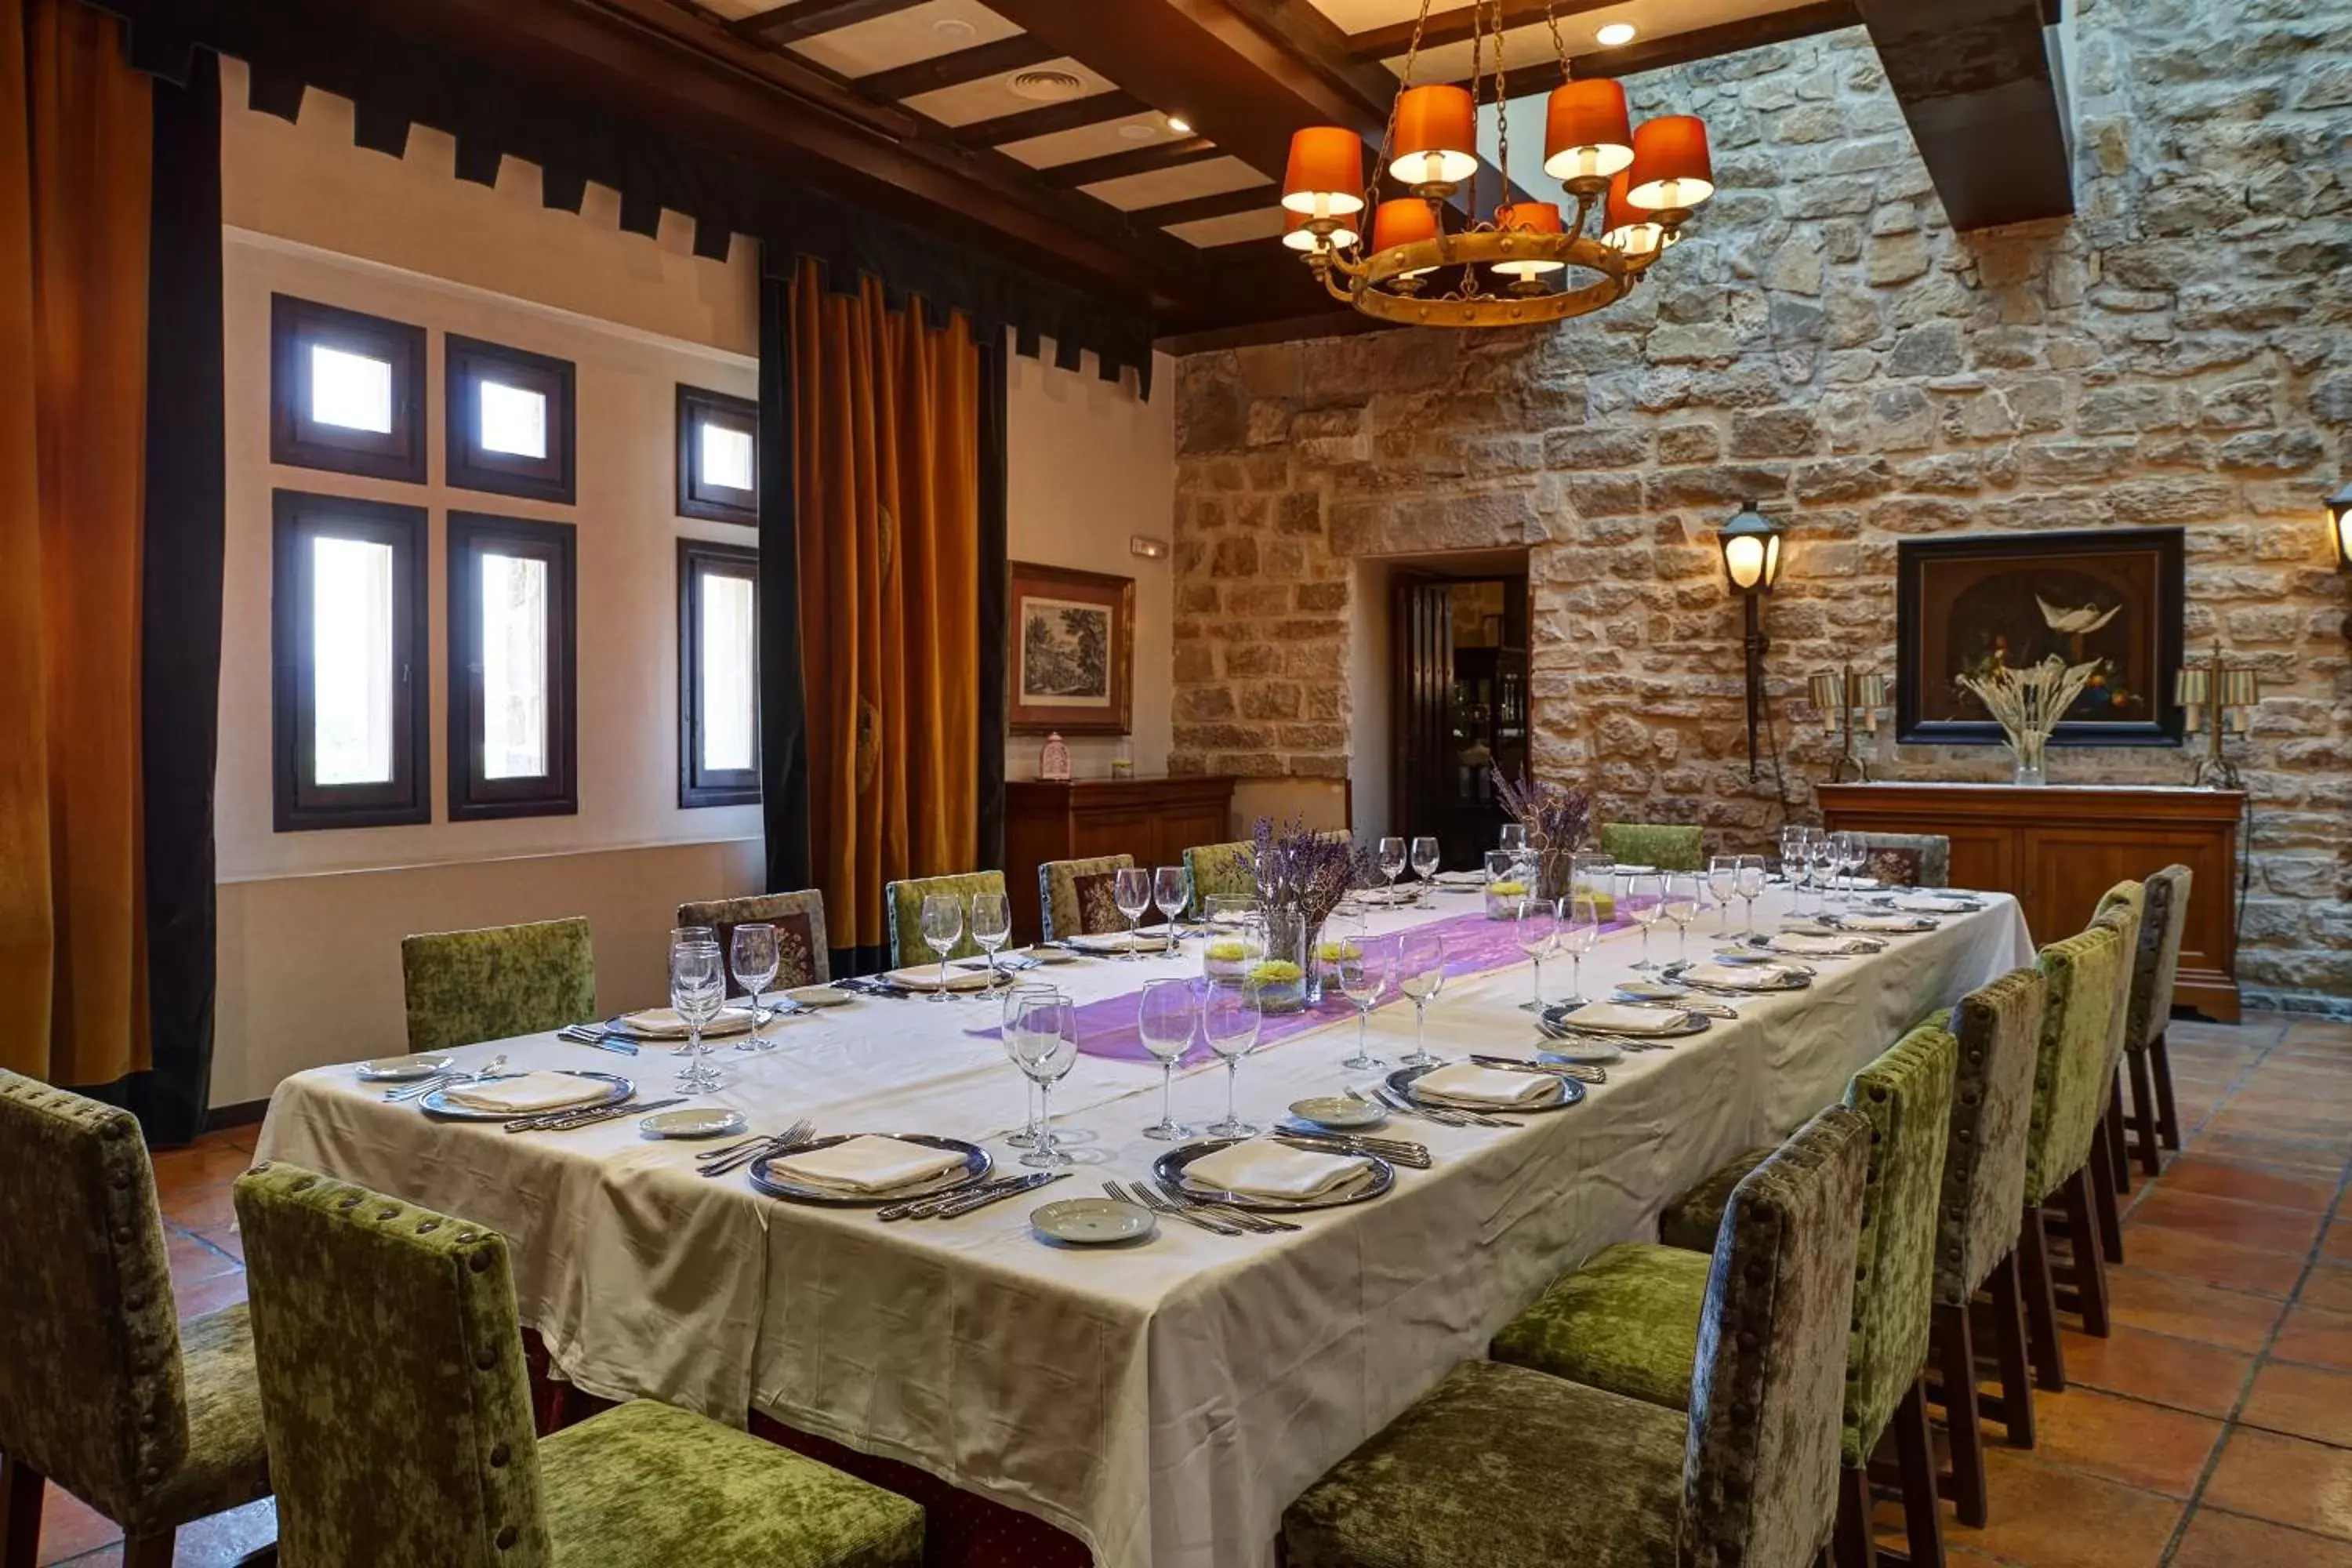 Banquet/Function facilities, Restaurant/Places to Eat in Parador de Olite